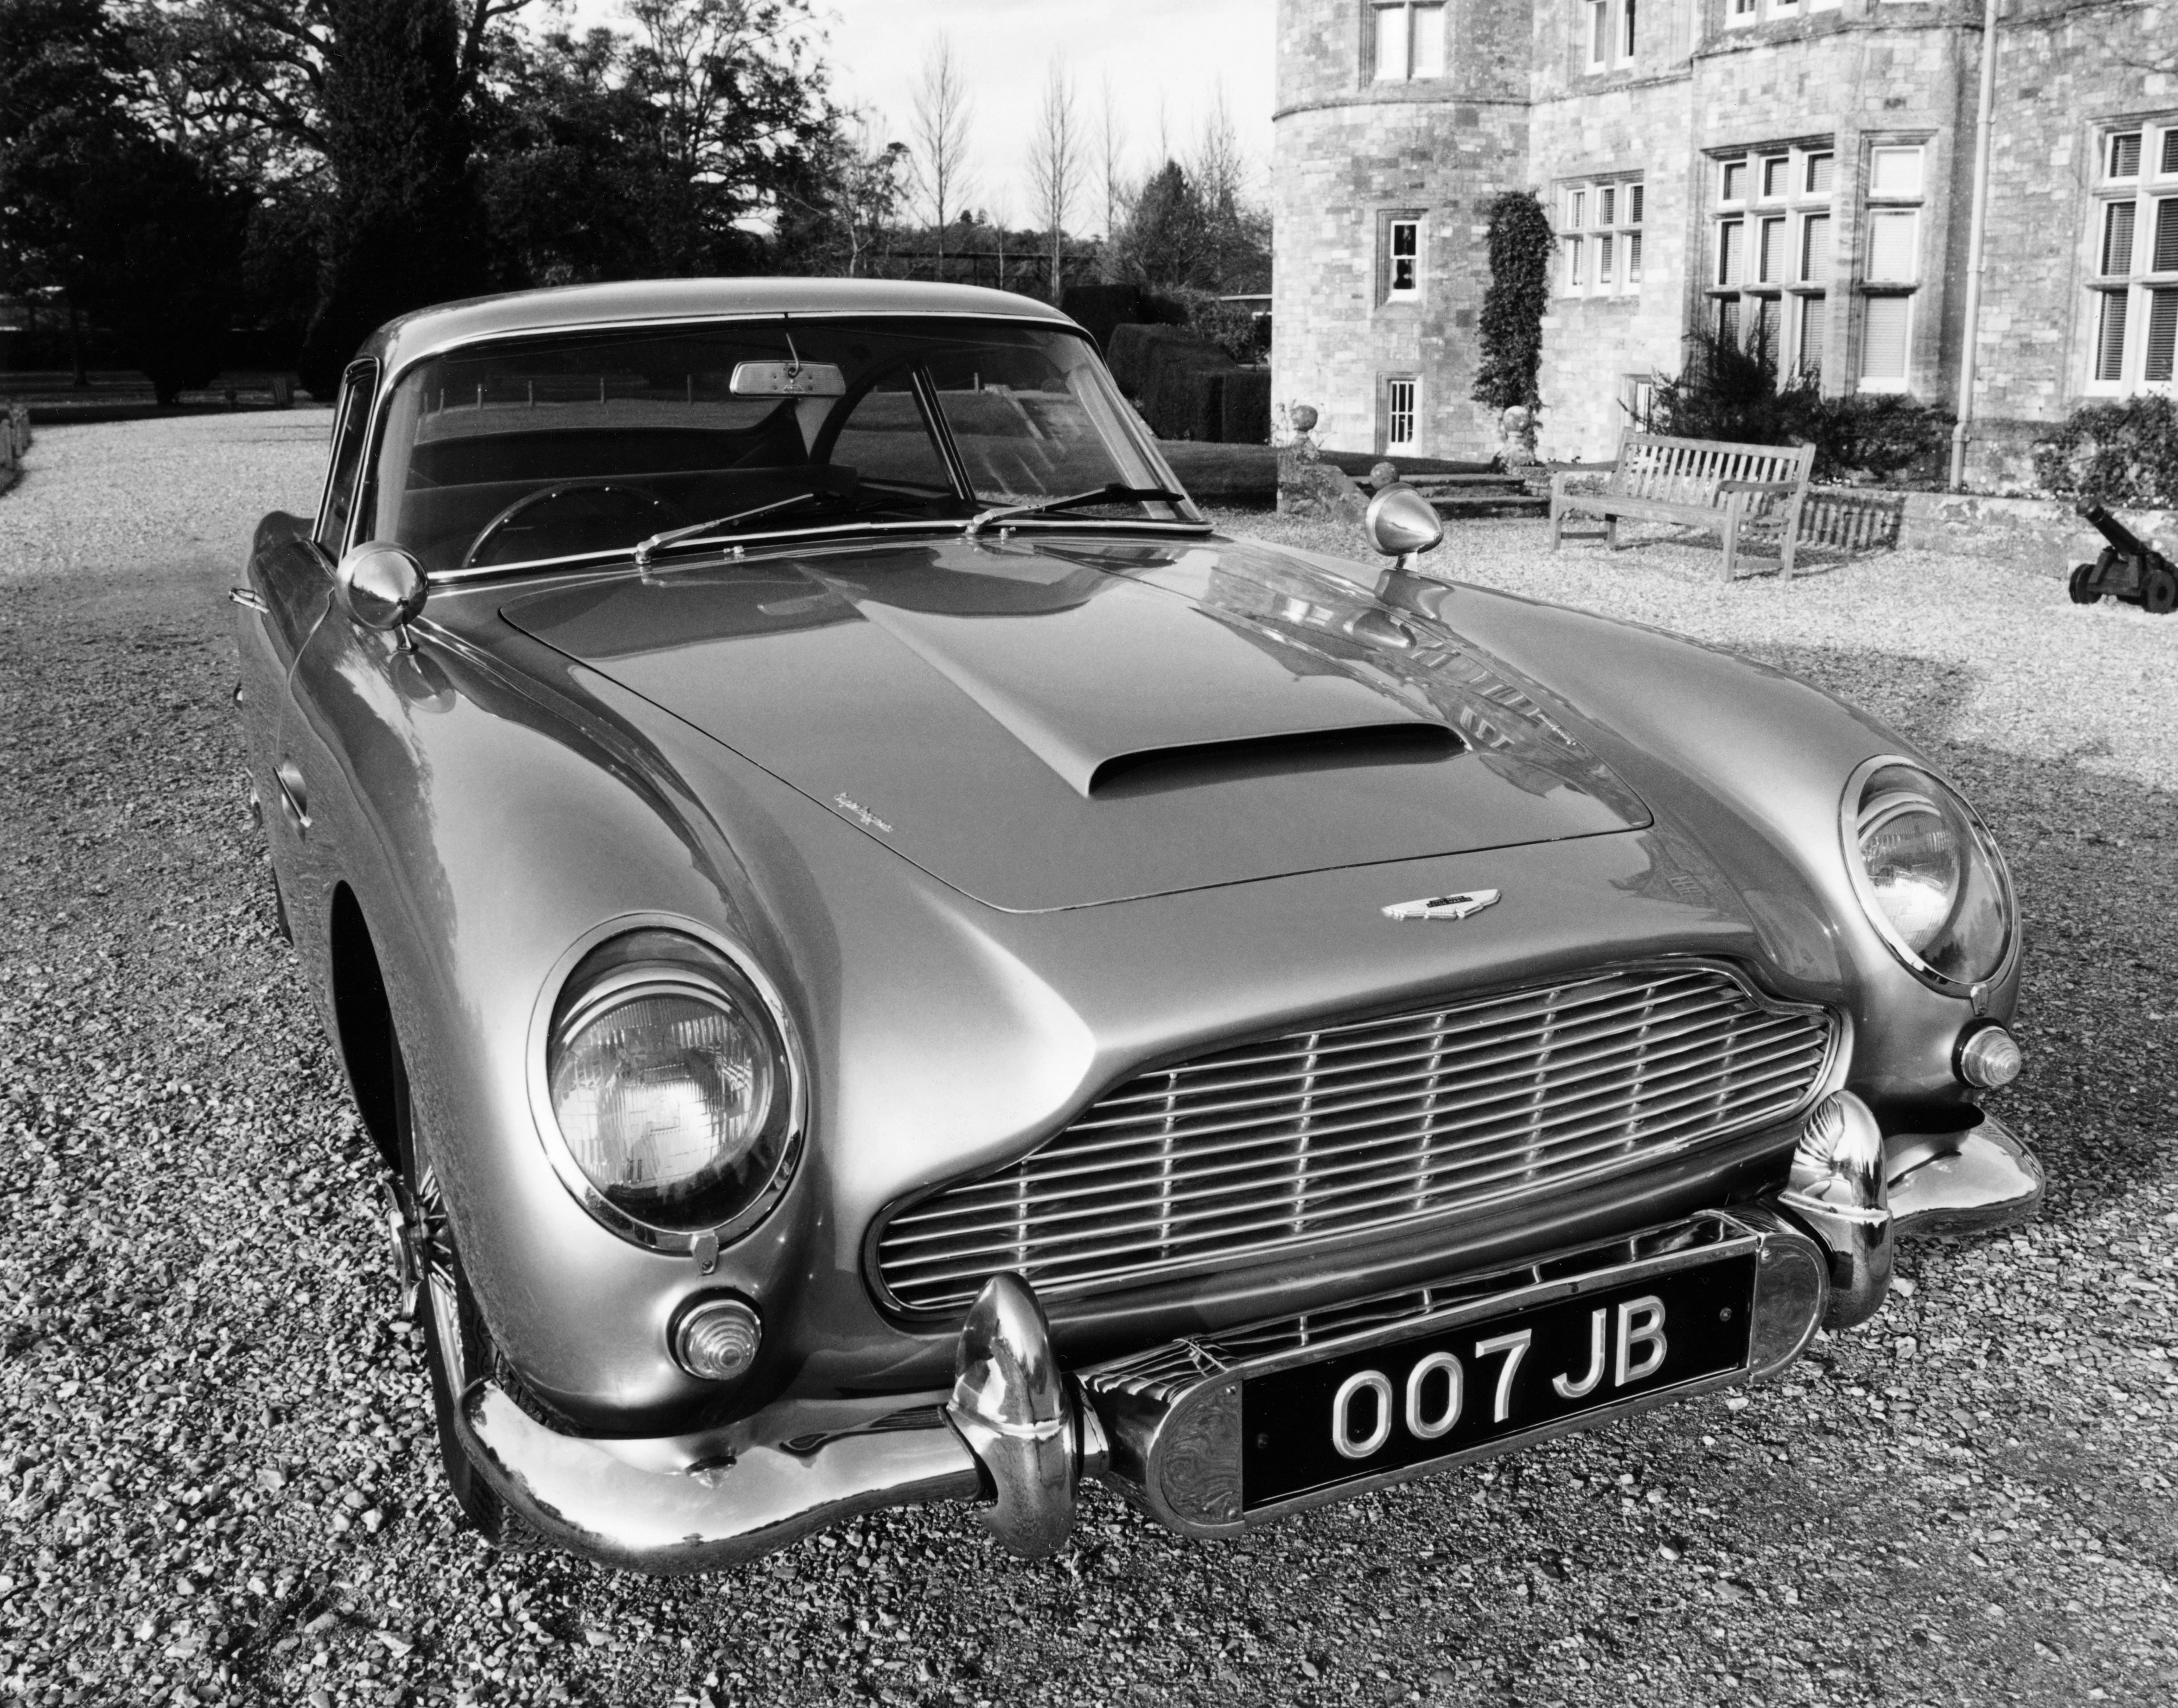 Aston Martin DB5 de James Bond, usado no filme Goldfinger. (Foto: National Motor Museum / Heritage Images / Getty Images)